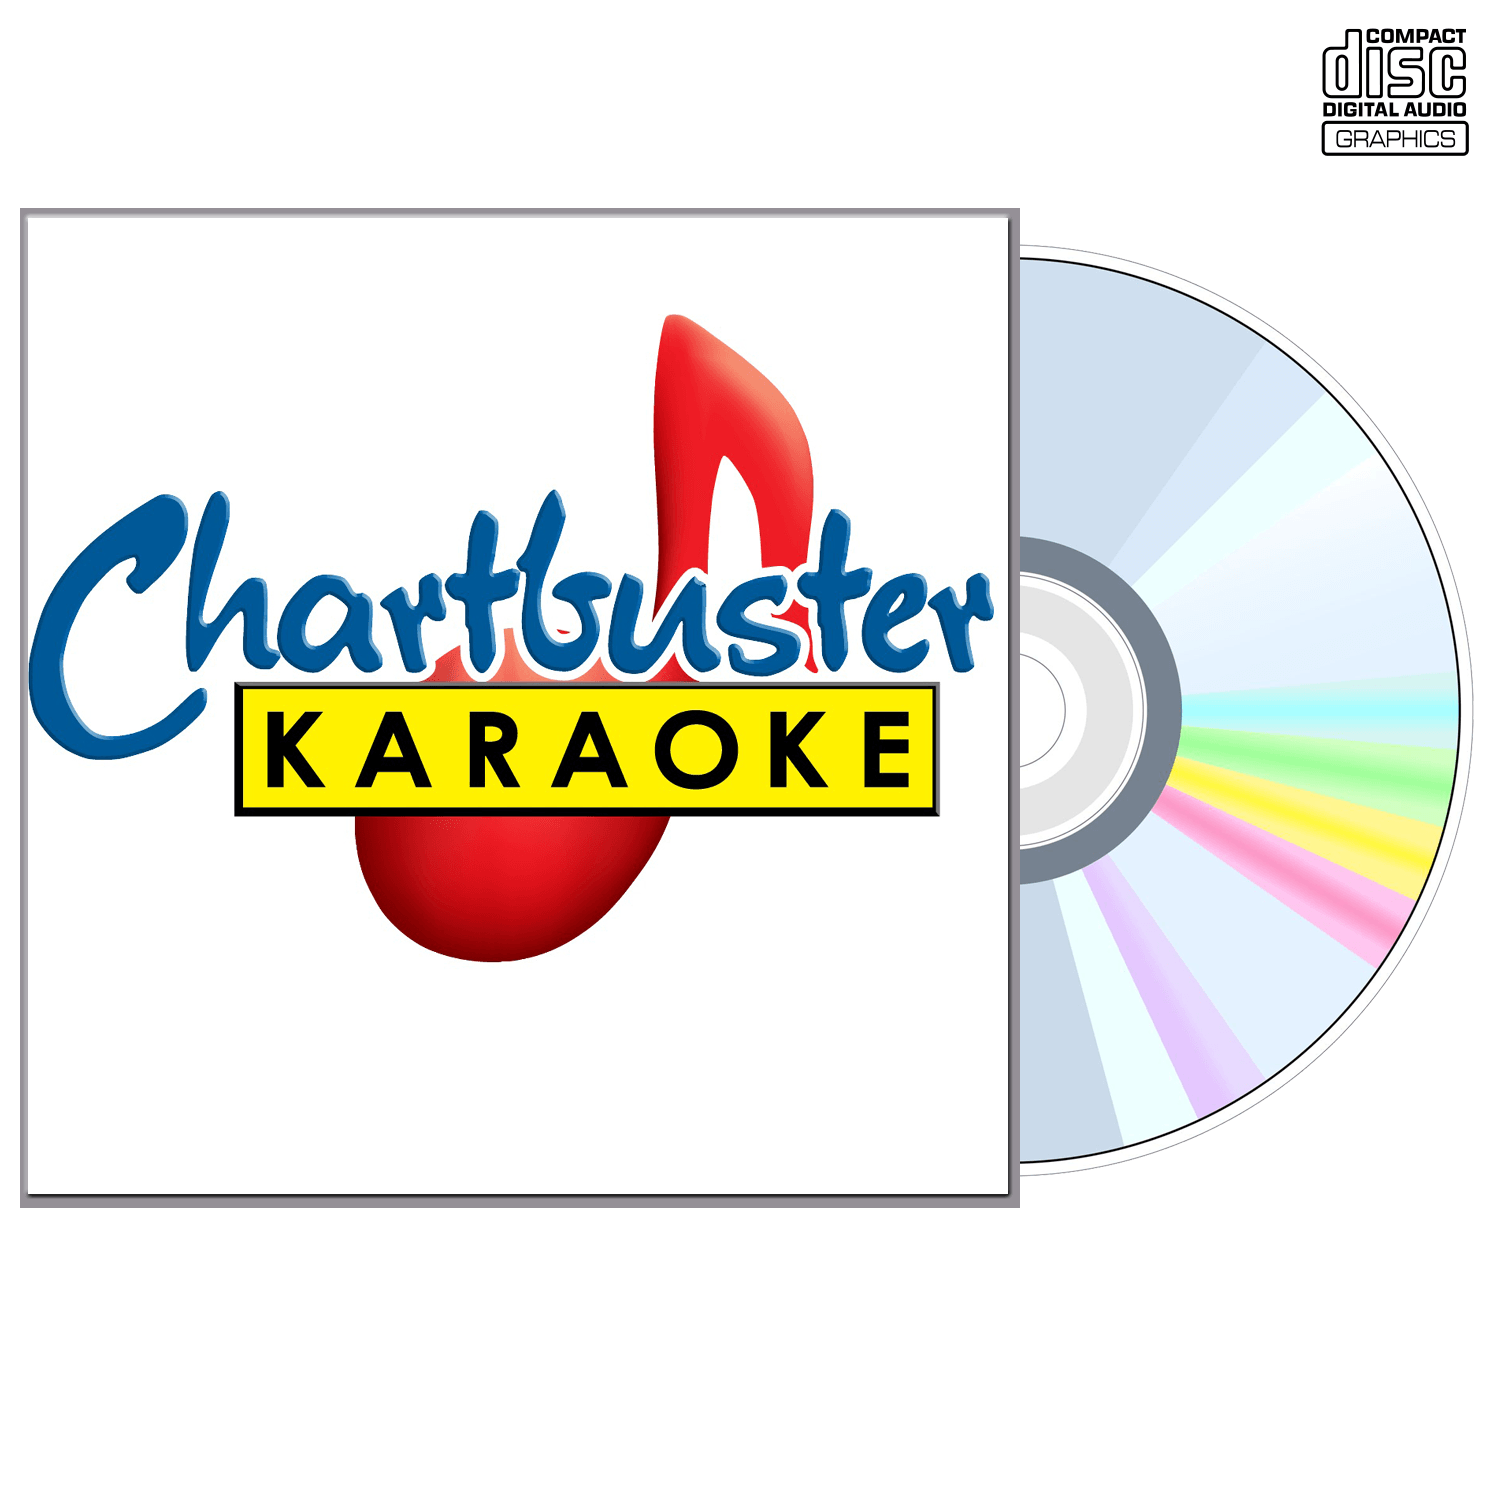 All American Rejects - CD+G - Chartbuster Karaoke - Karaoke Home Entertainment